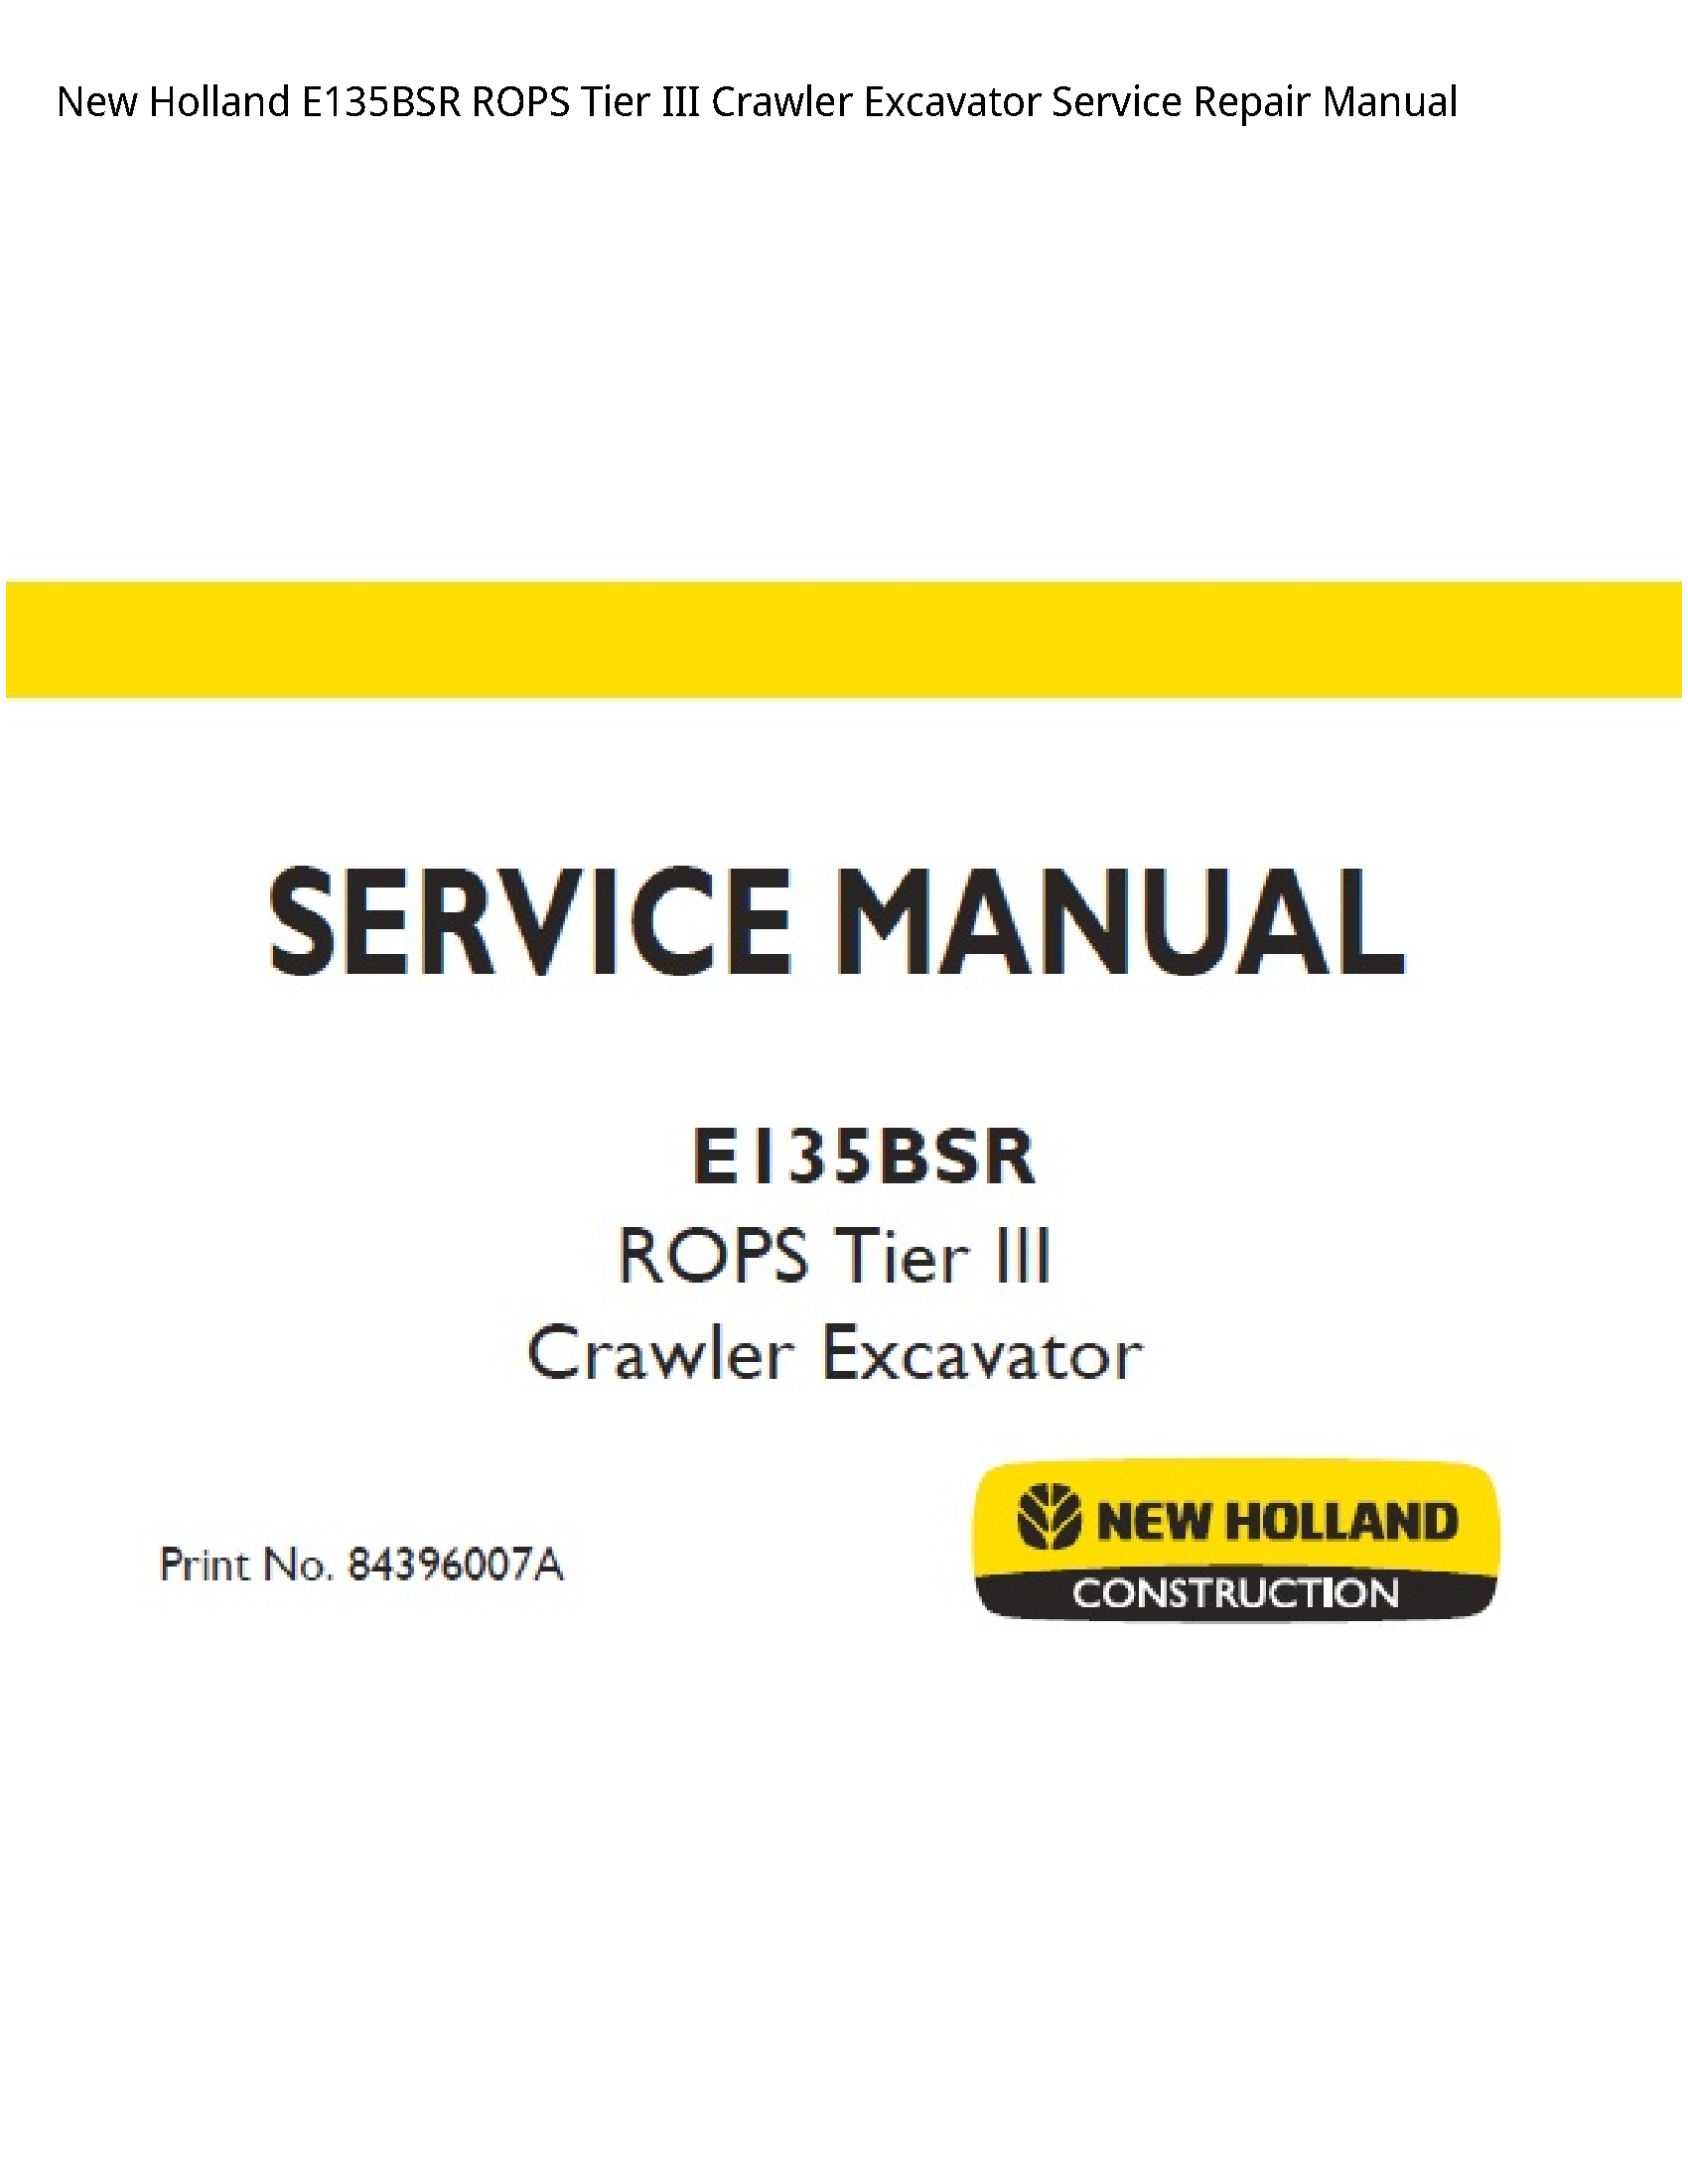 New Holland E135BSR ROPS Tier III Crawler Excavator manual